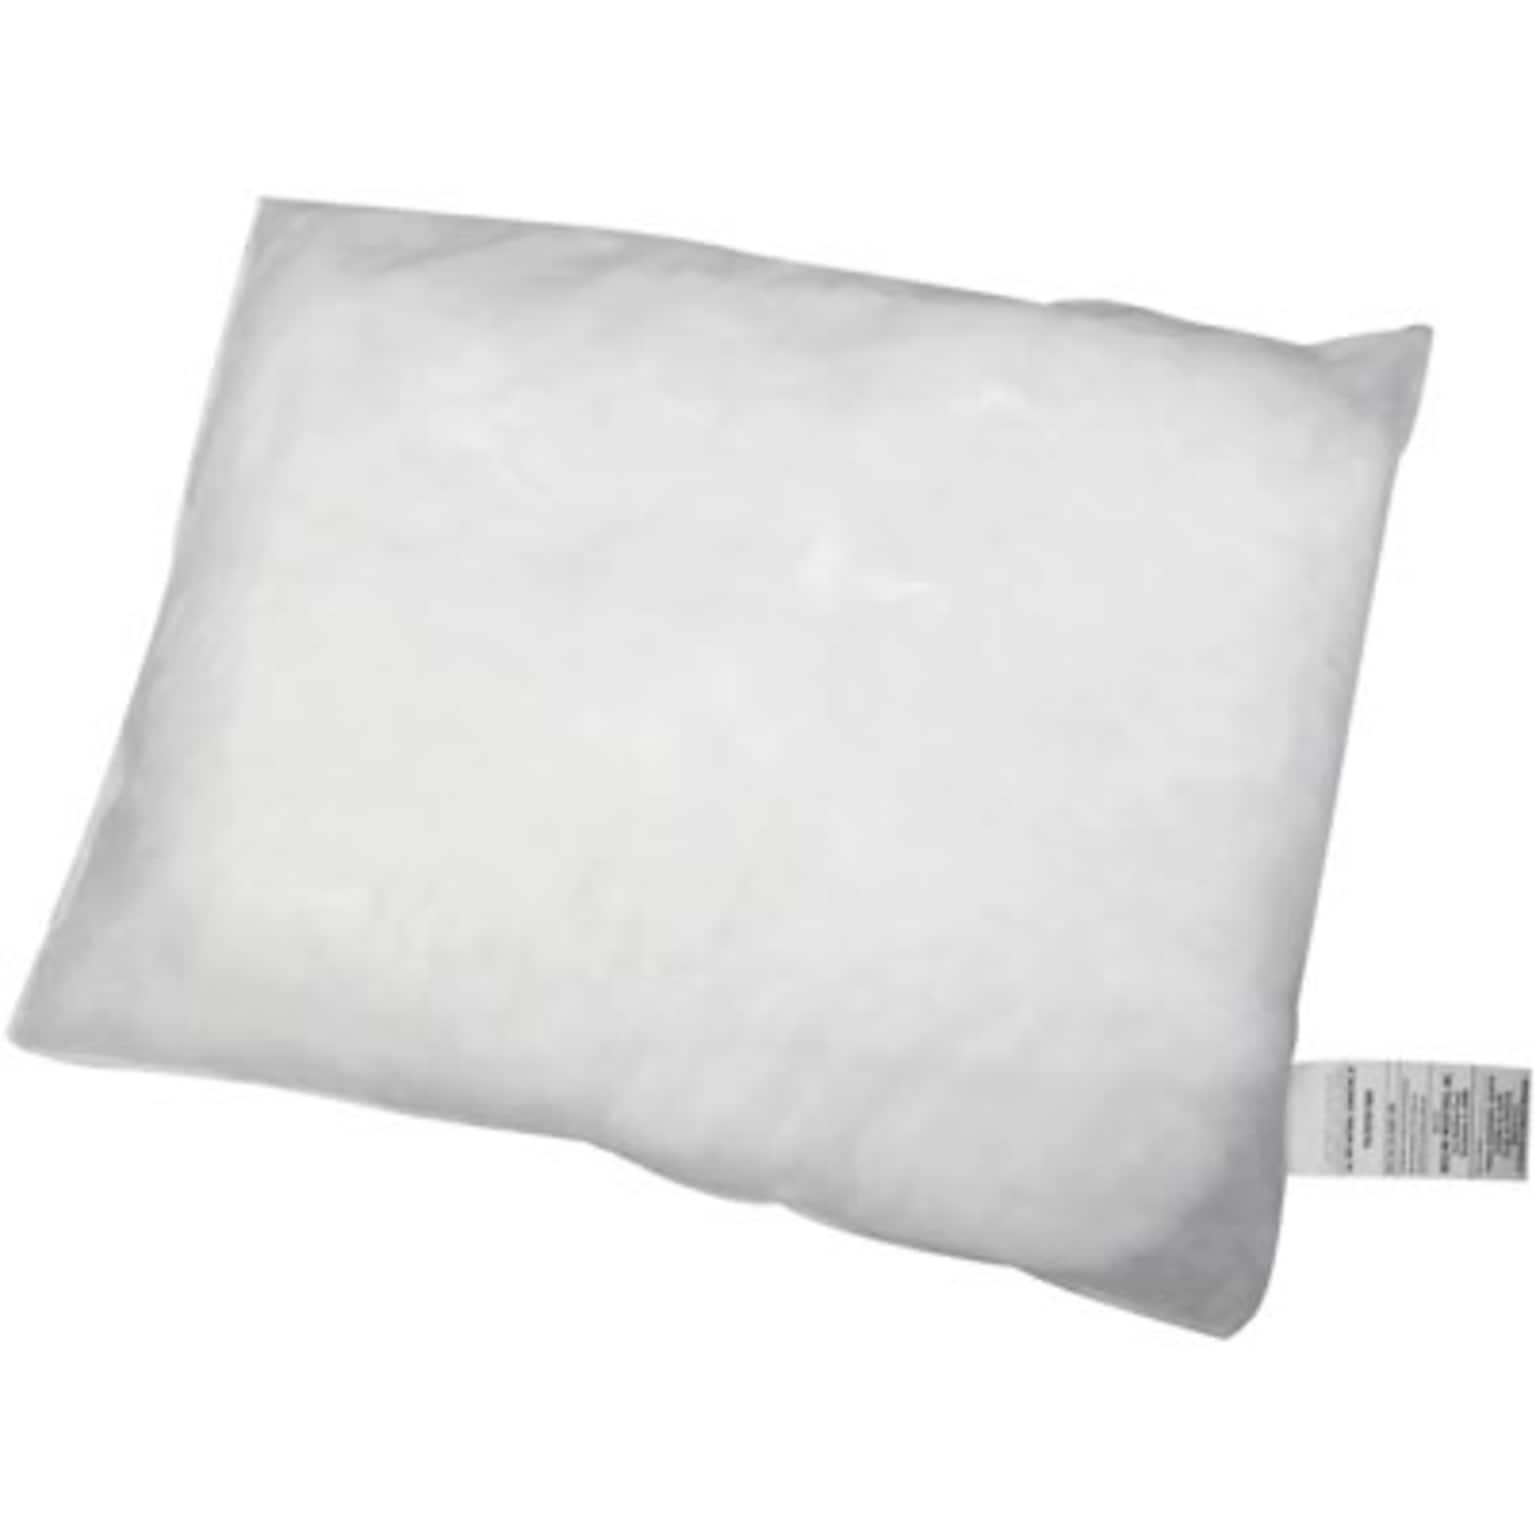 Medline Disposable Pillows; 21x27